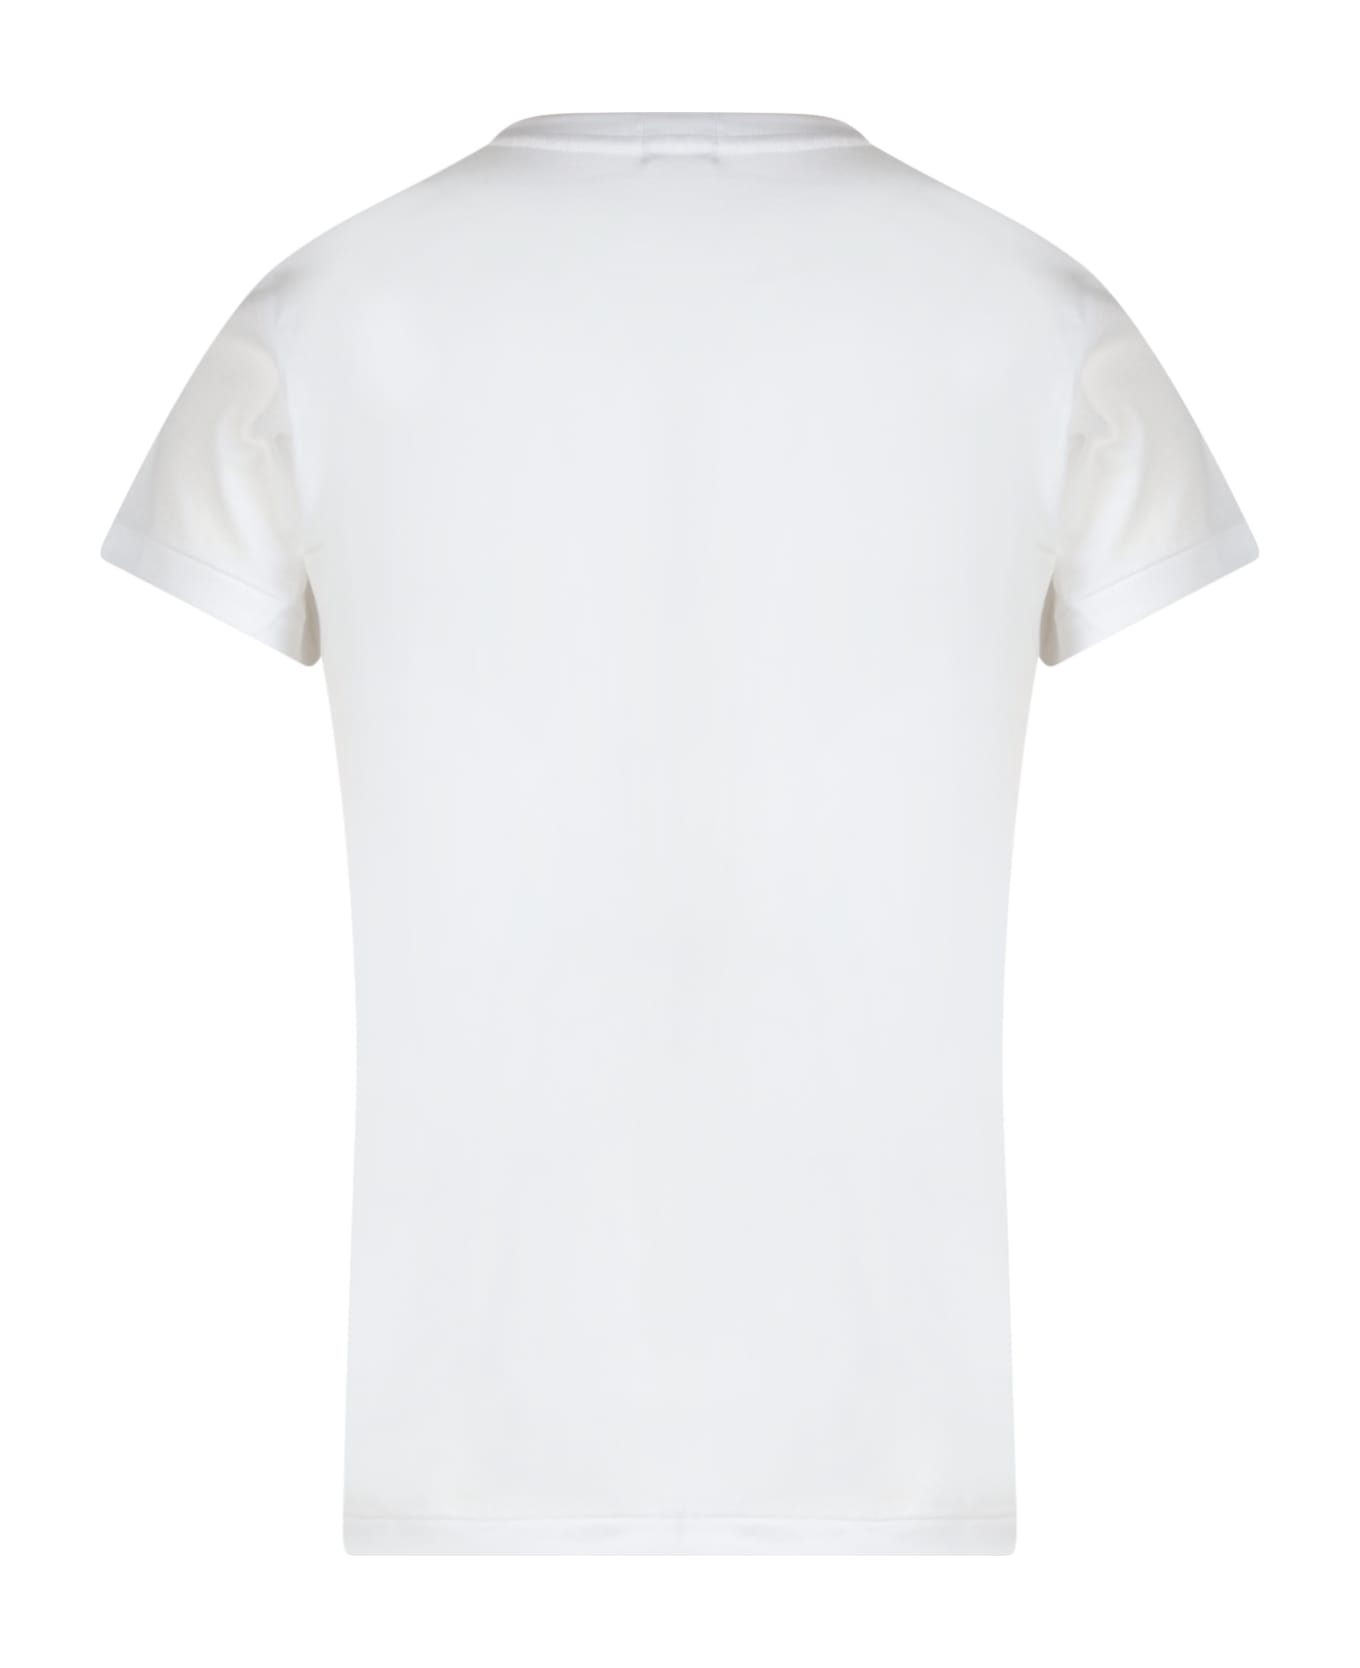 Ralph Lauren T-shirt - White Tシャツ